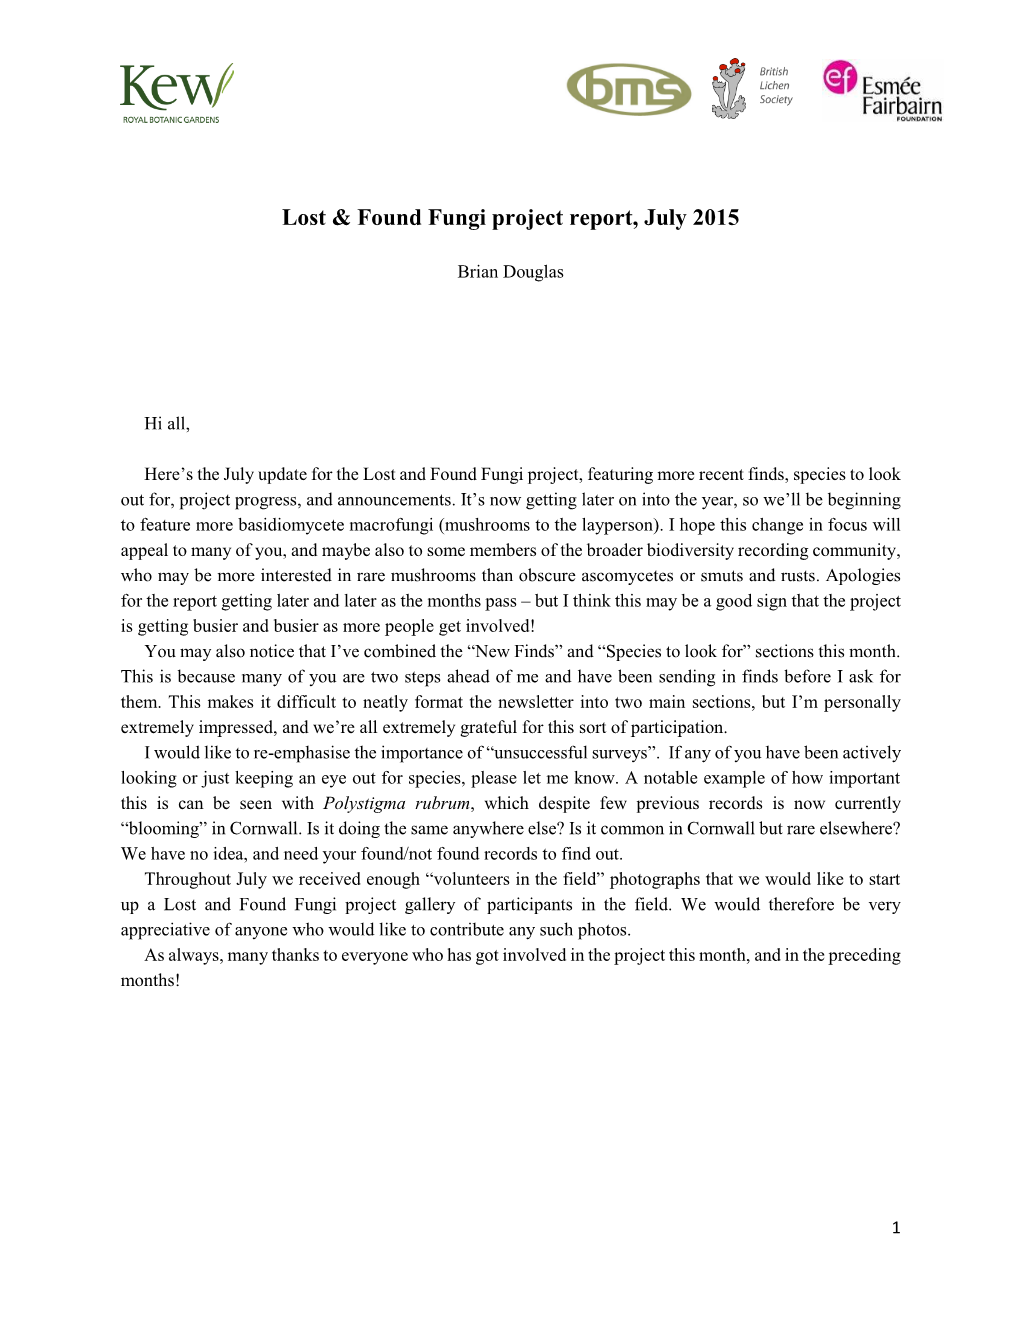 Lost & Found Fungi Project Report, July 2015